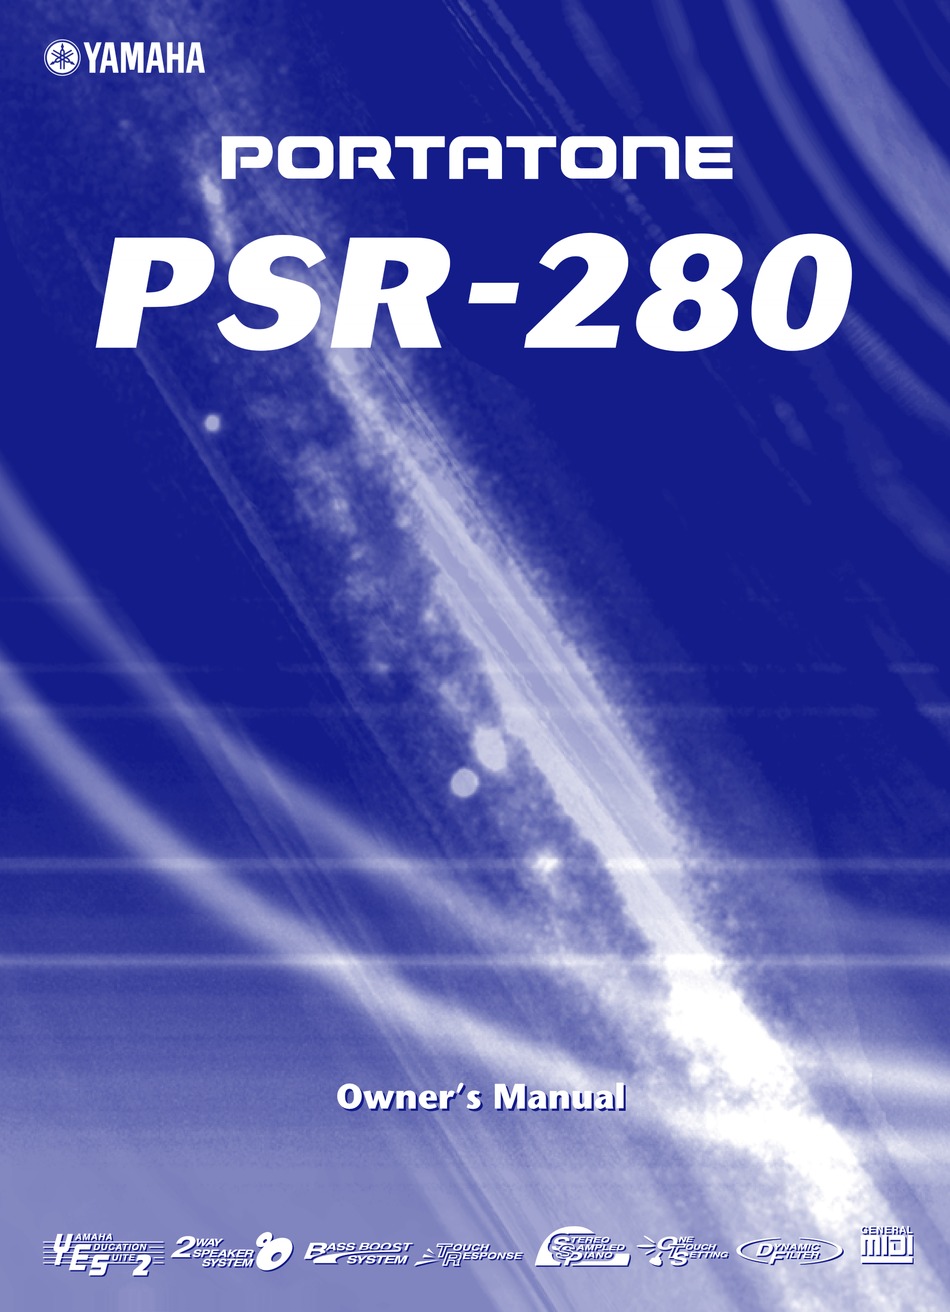 YAMAHA PORTATONE PSR-280 OWNER'S MANUAL Pdf Download | ManualsLib